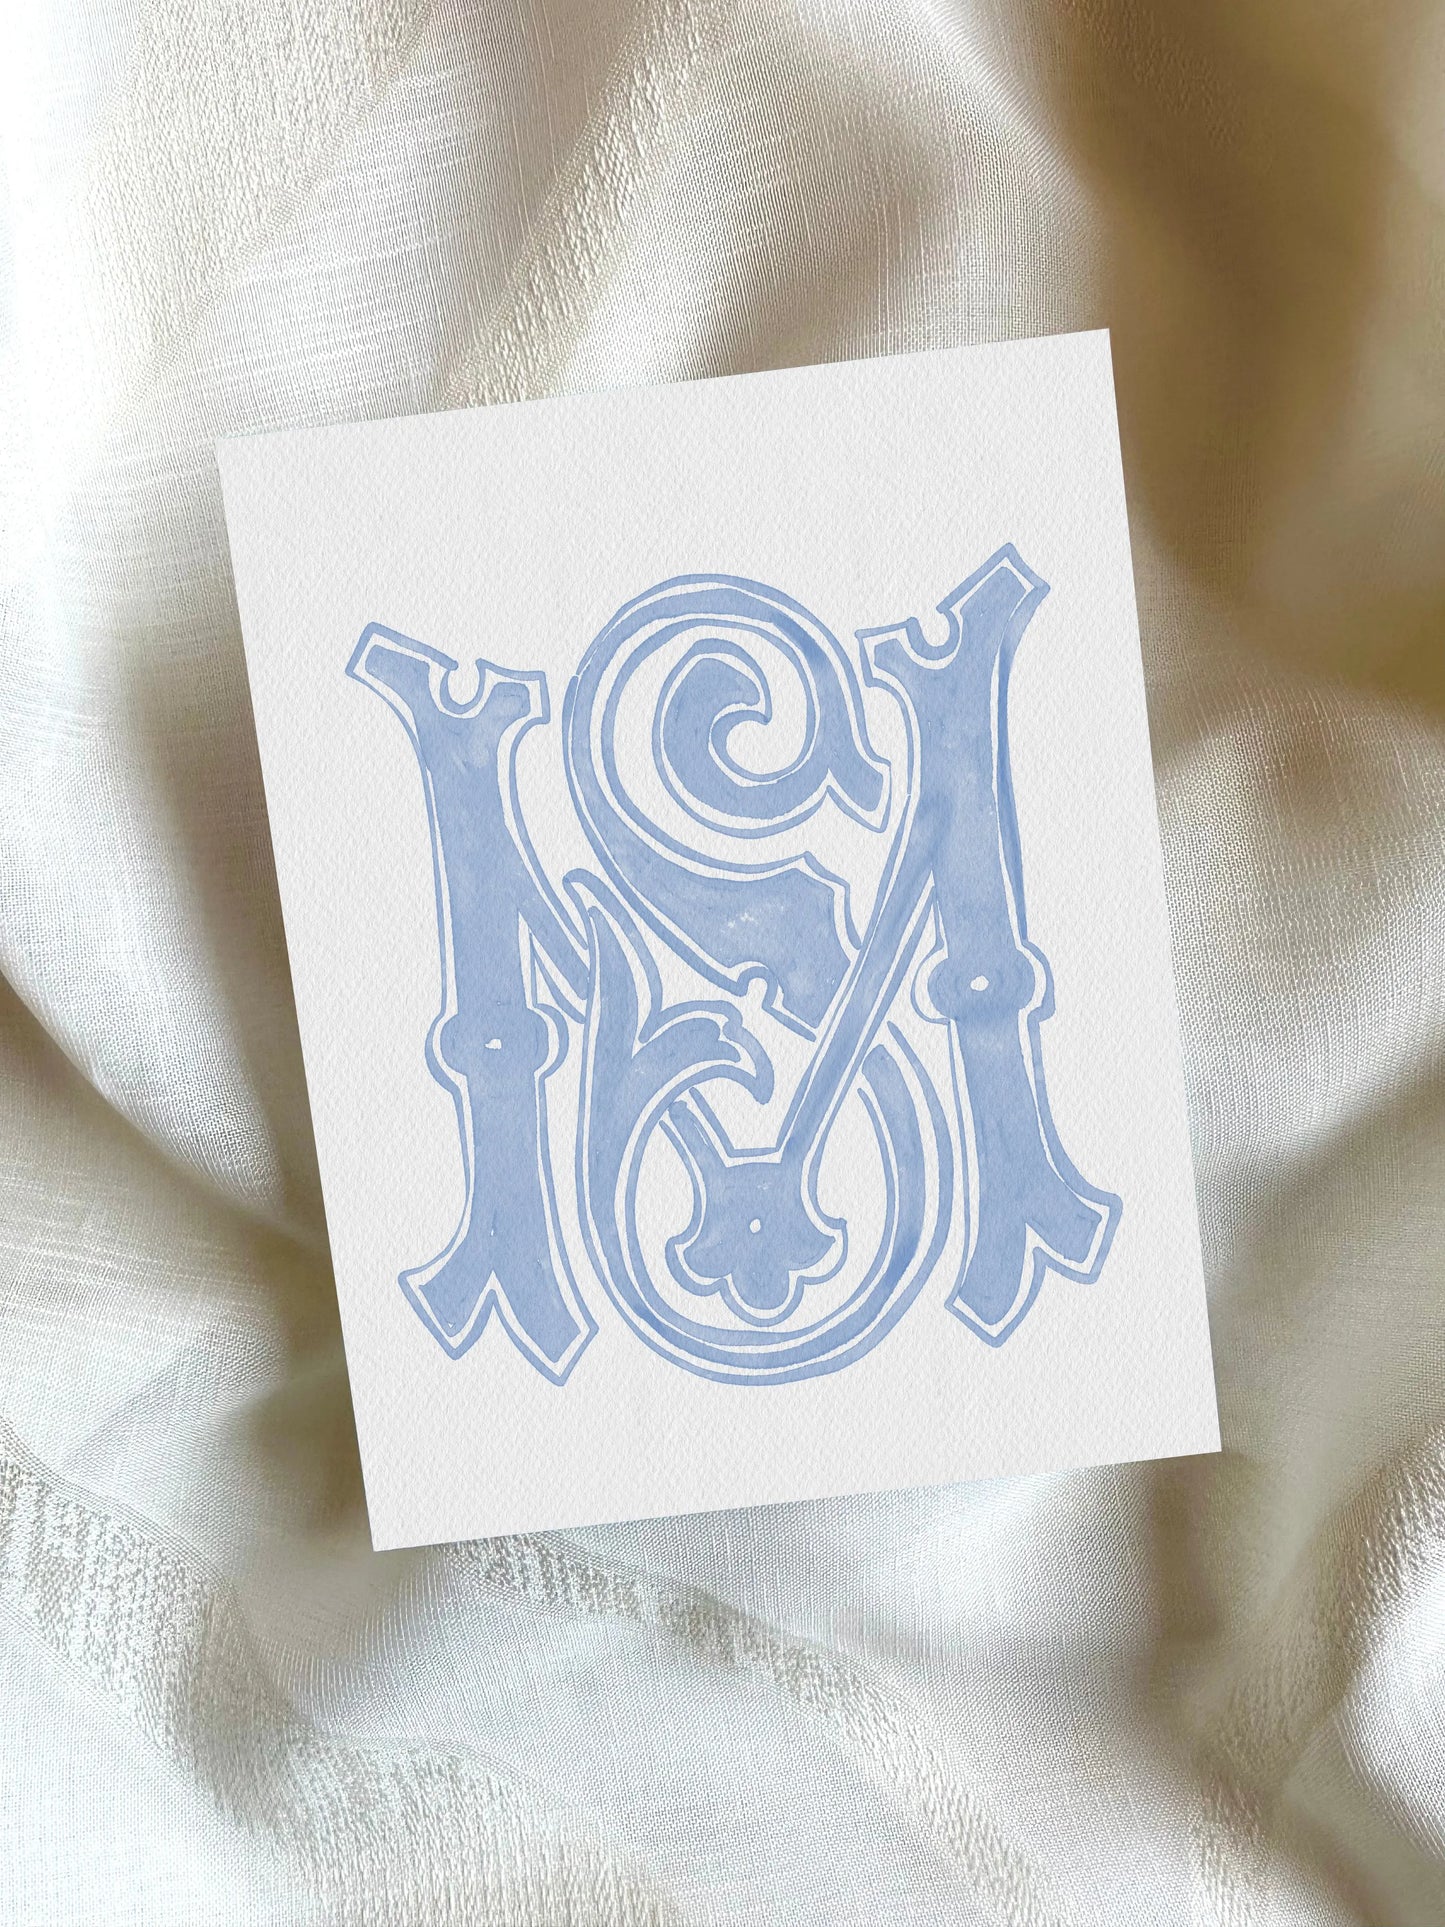 2 Letter Monogram with Letters MS | Digital Download - Wedding Monogram SVG, Personal Logo, Wedding Logo for Wedding Invitations The Wedding Crest Lab